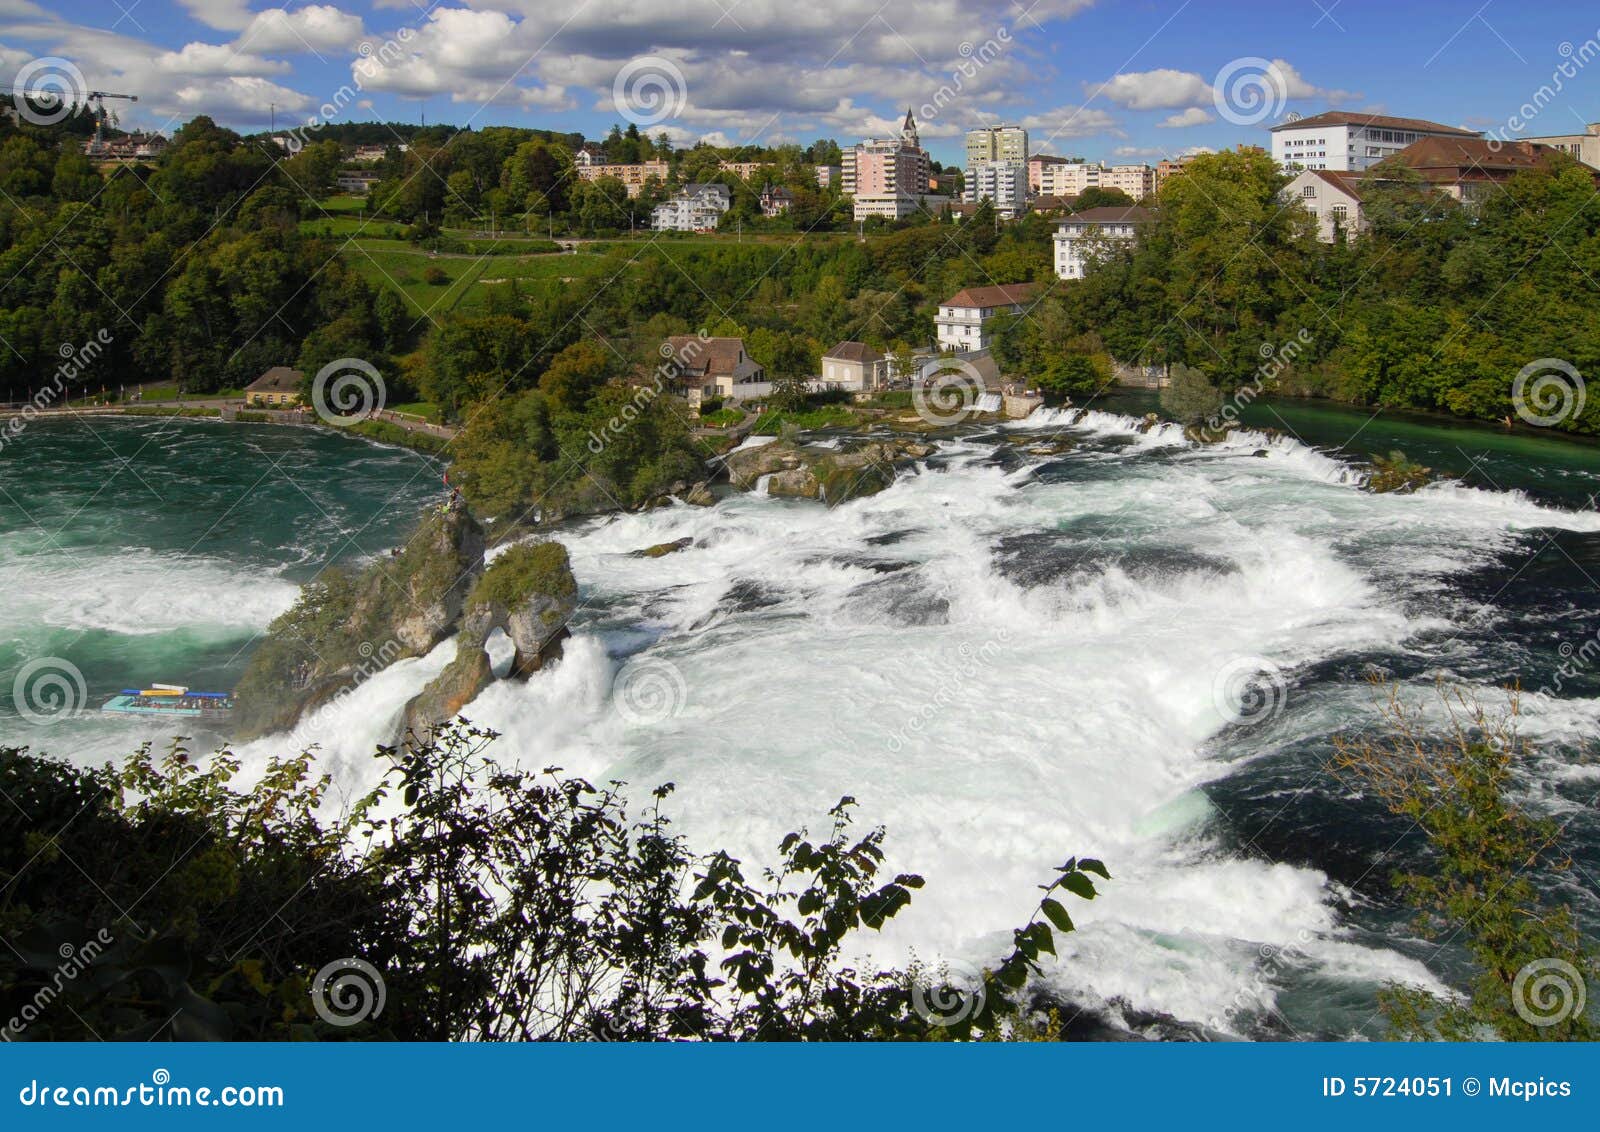 europe's largest waterfalls